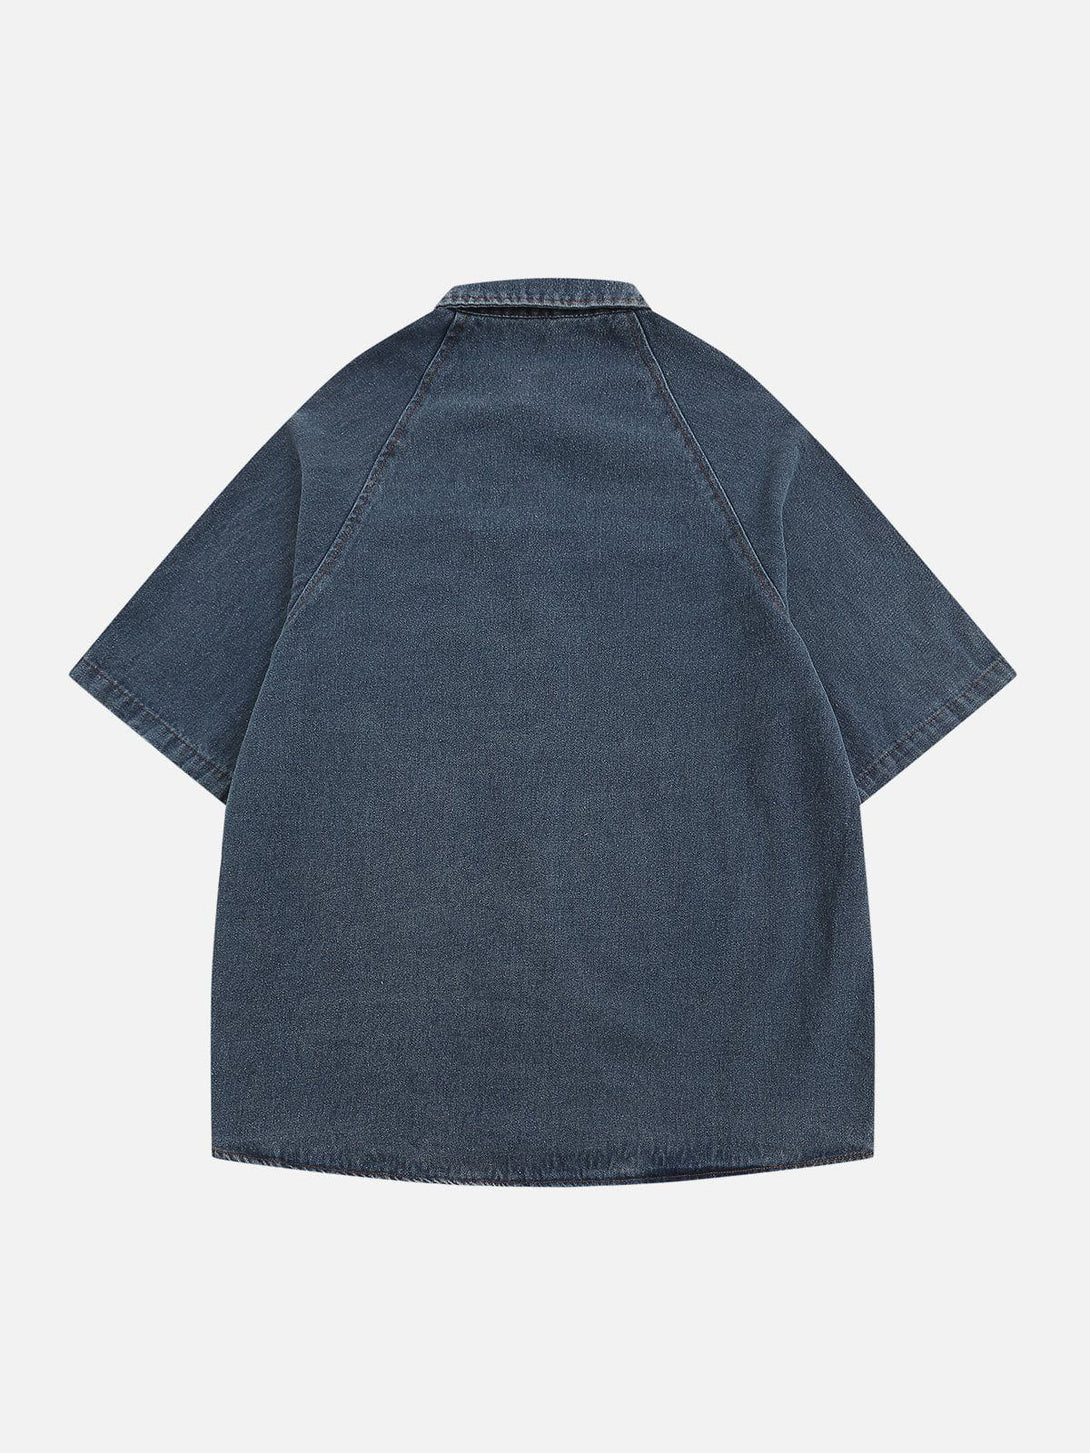 AlanBalen® - Embroidered Letter Denim Short Sleeve Shirts AlanBalen